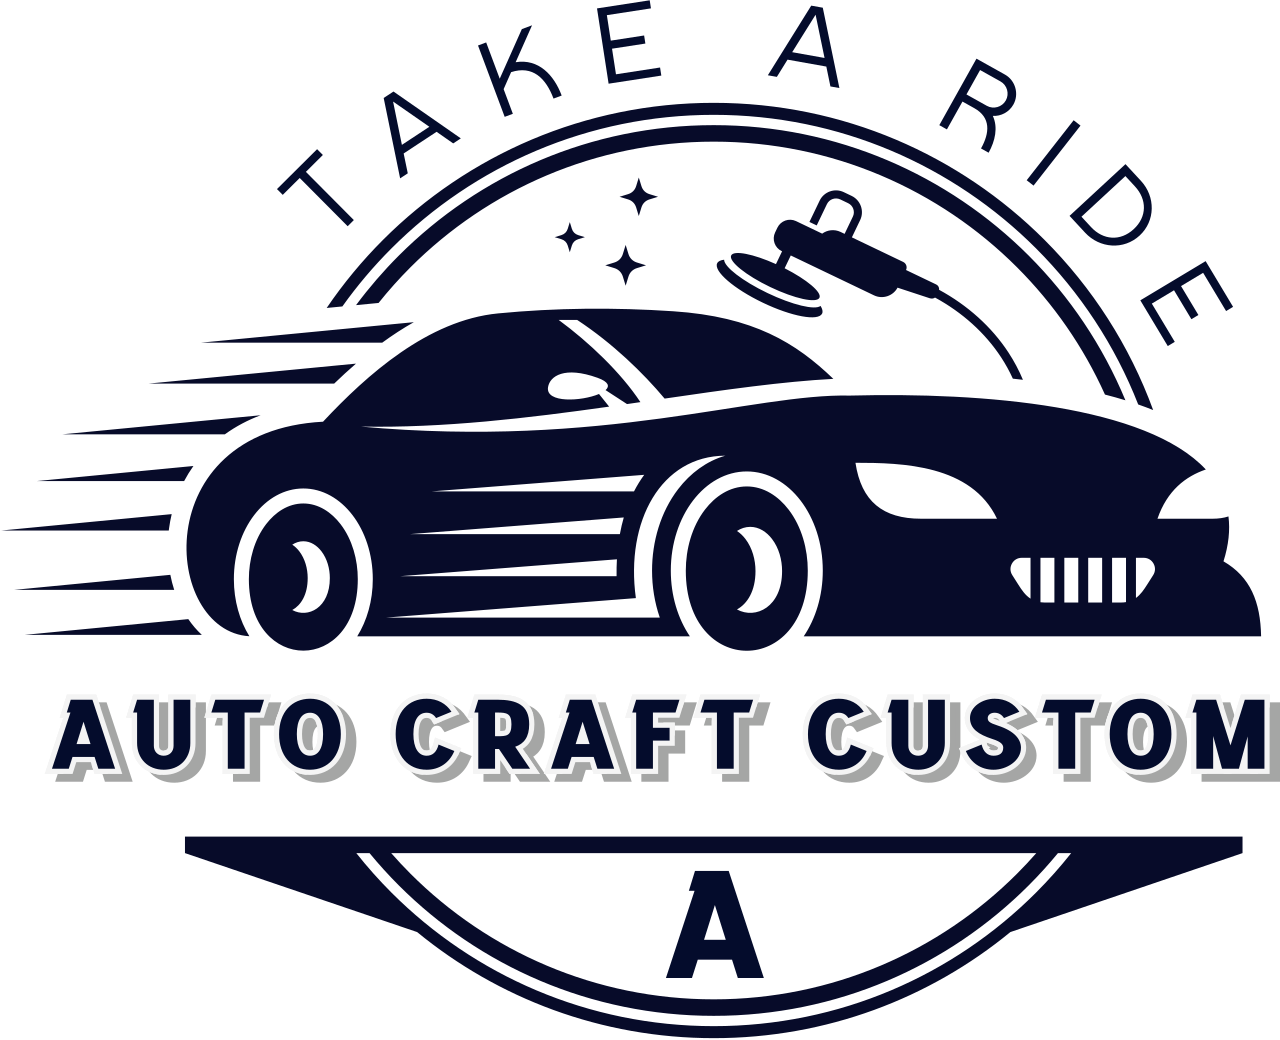 Auto Craft Custom's logo